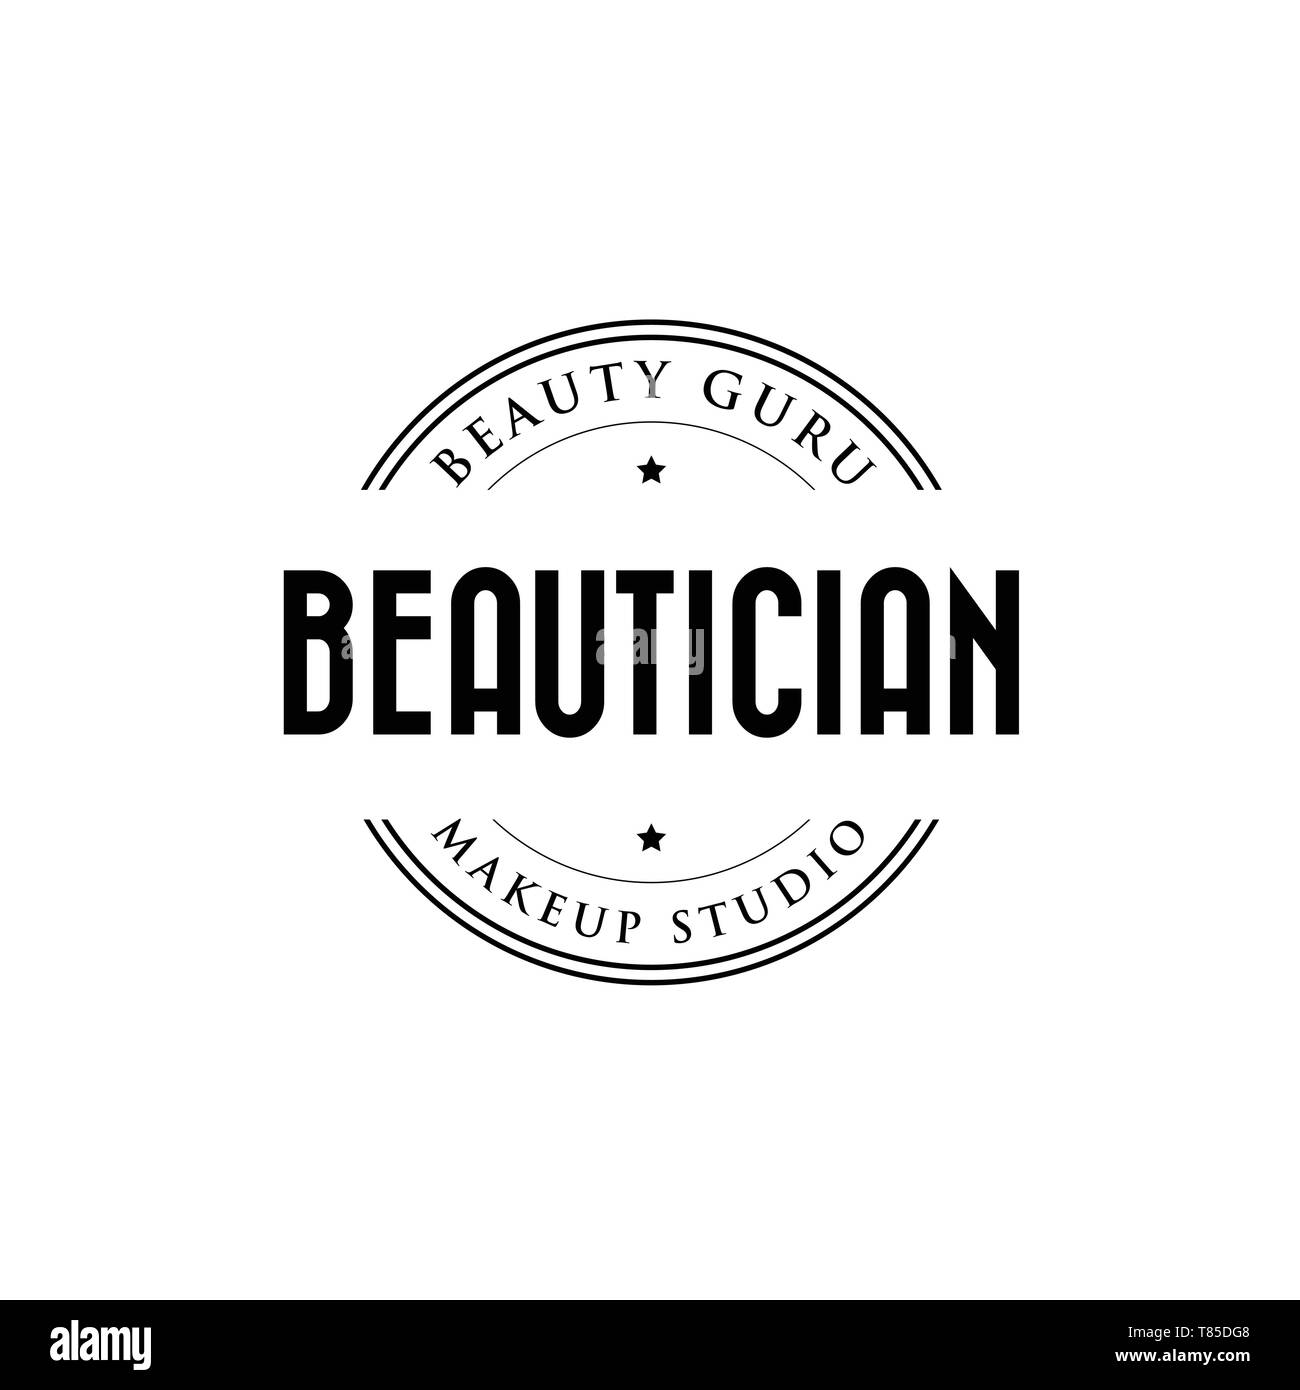 Beautician makeup studio logo stamp Stock Vector